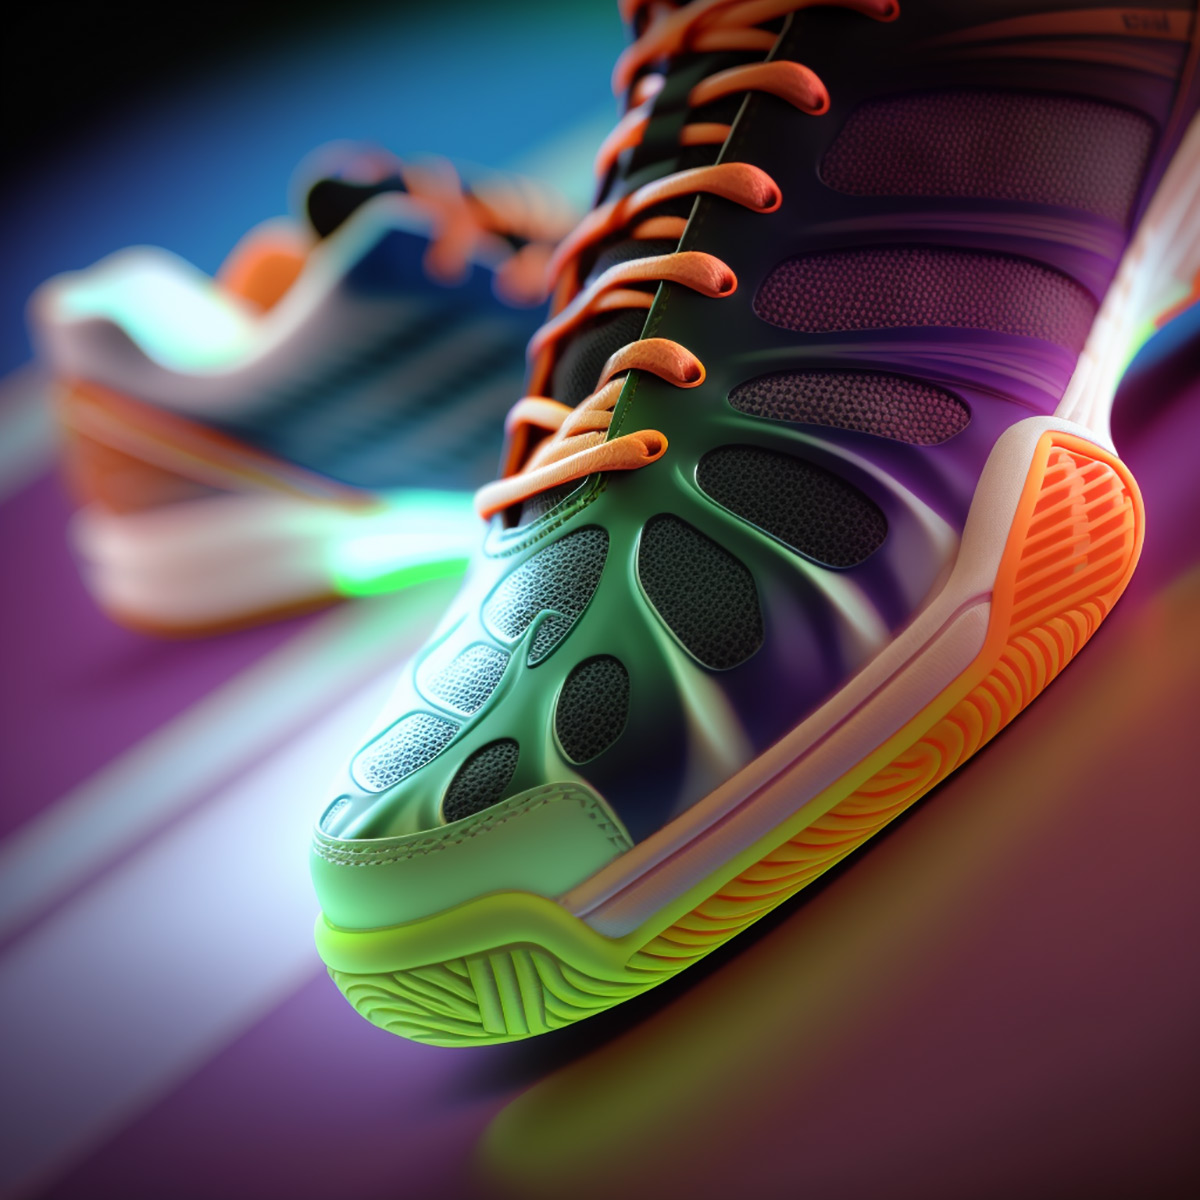 futuristic badminton shoes